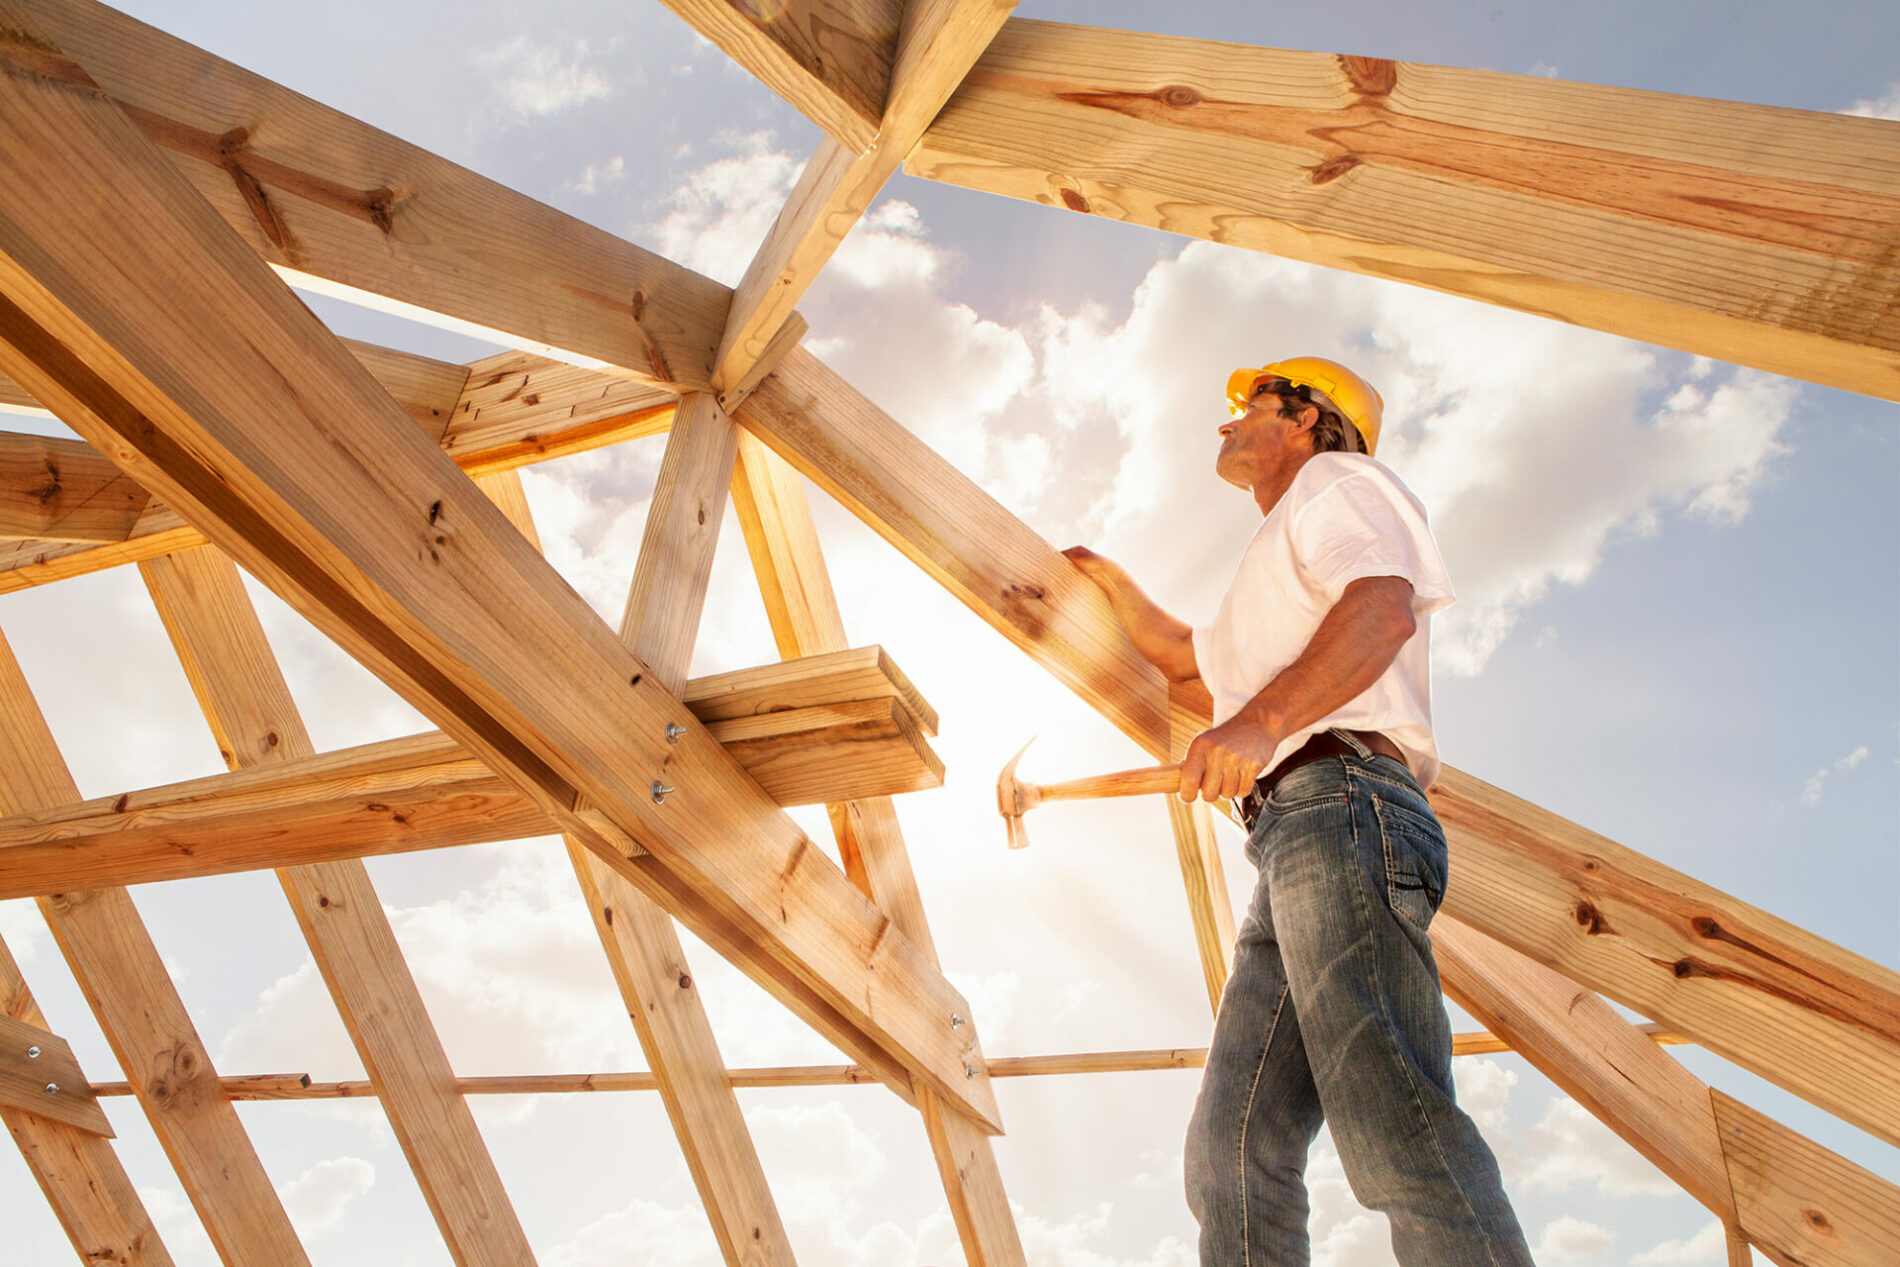 roofer building a wooden structure frame